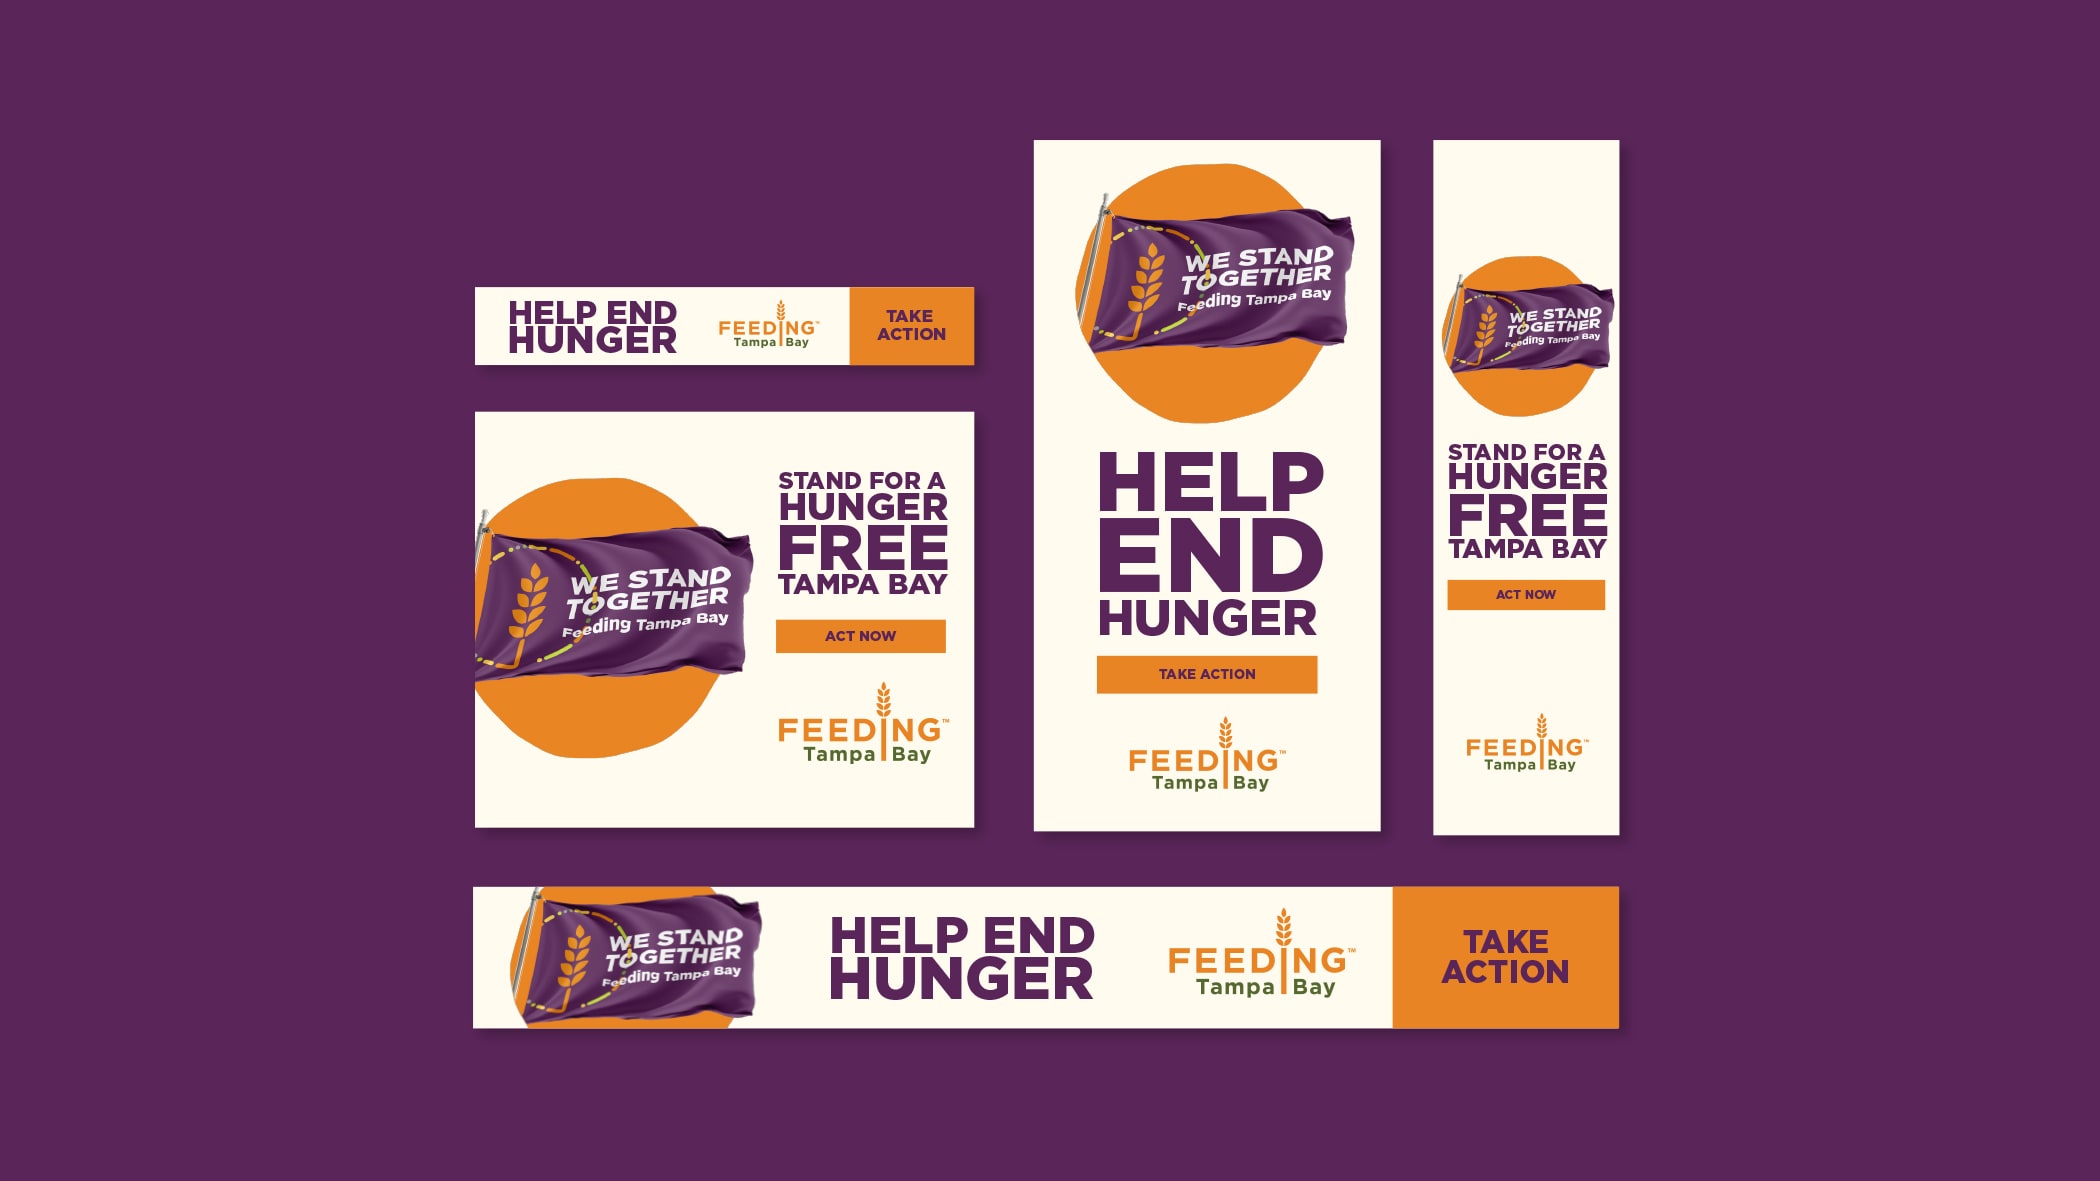 Digital Display Ads for Feeding Tampa Bay - Help End Hunger